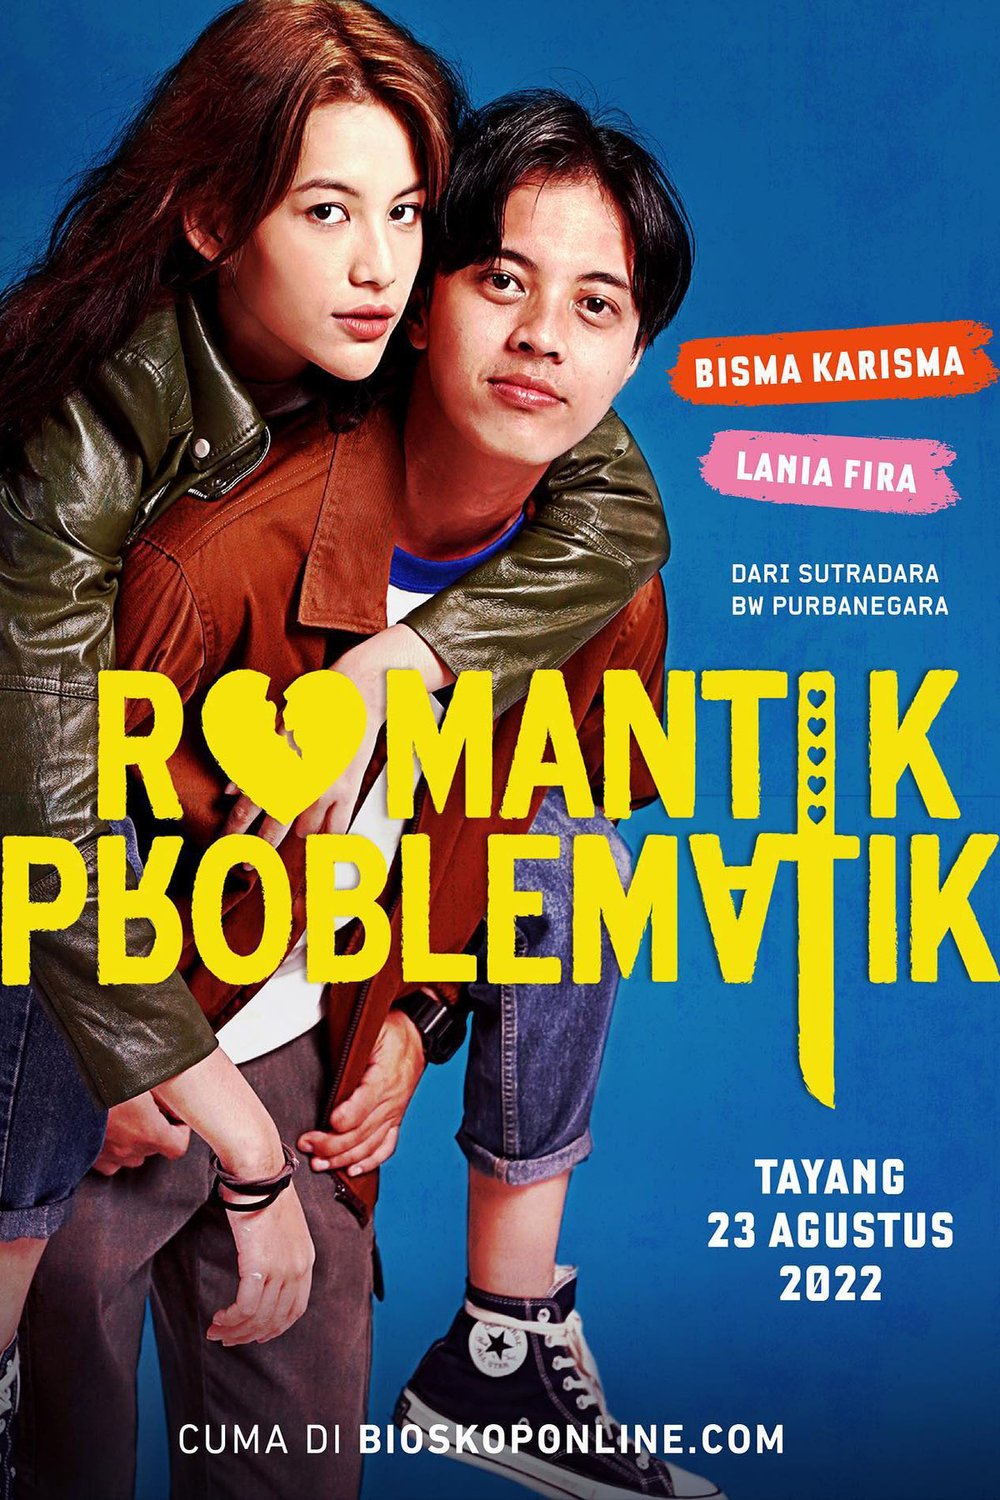 Indonesian poster of the movie Romantik Problematik